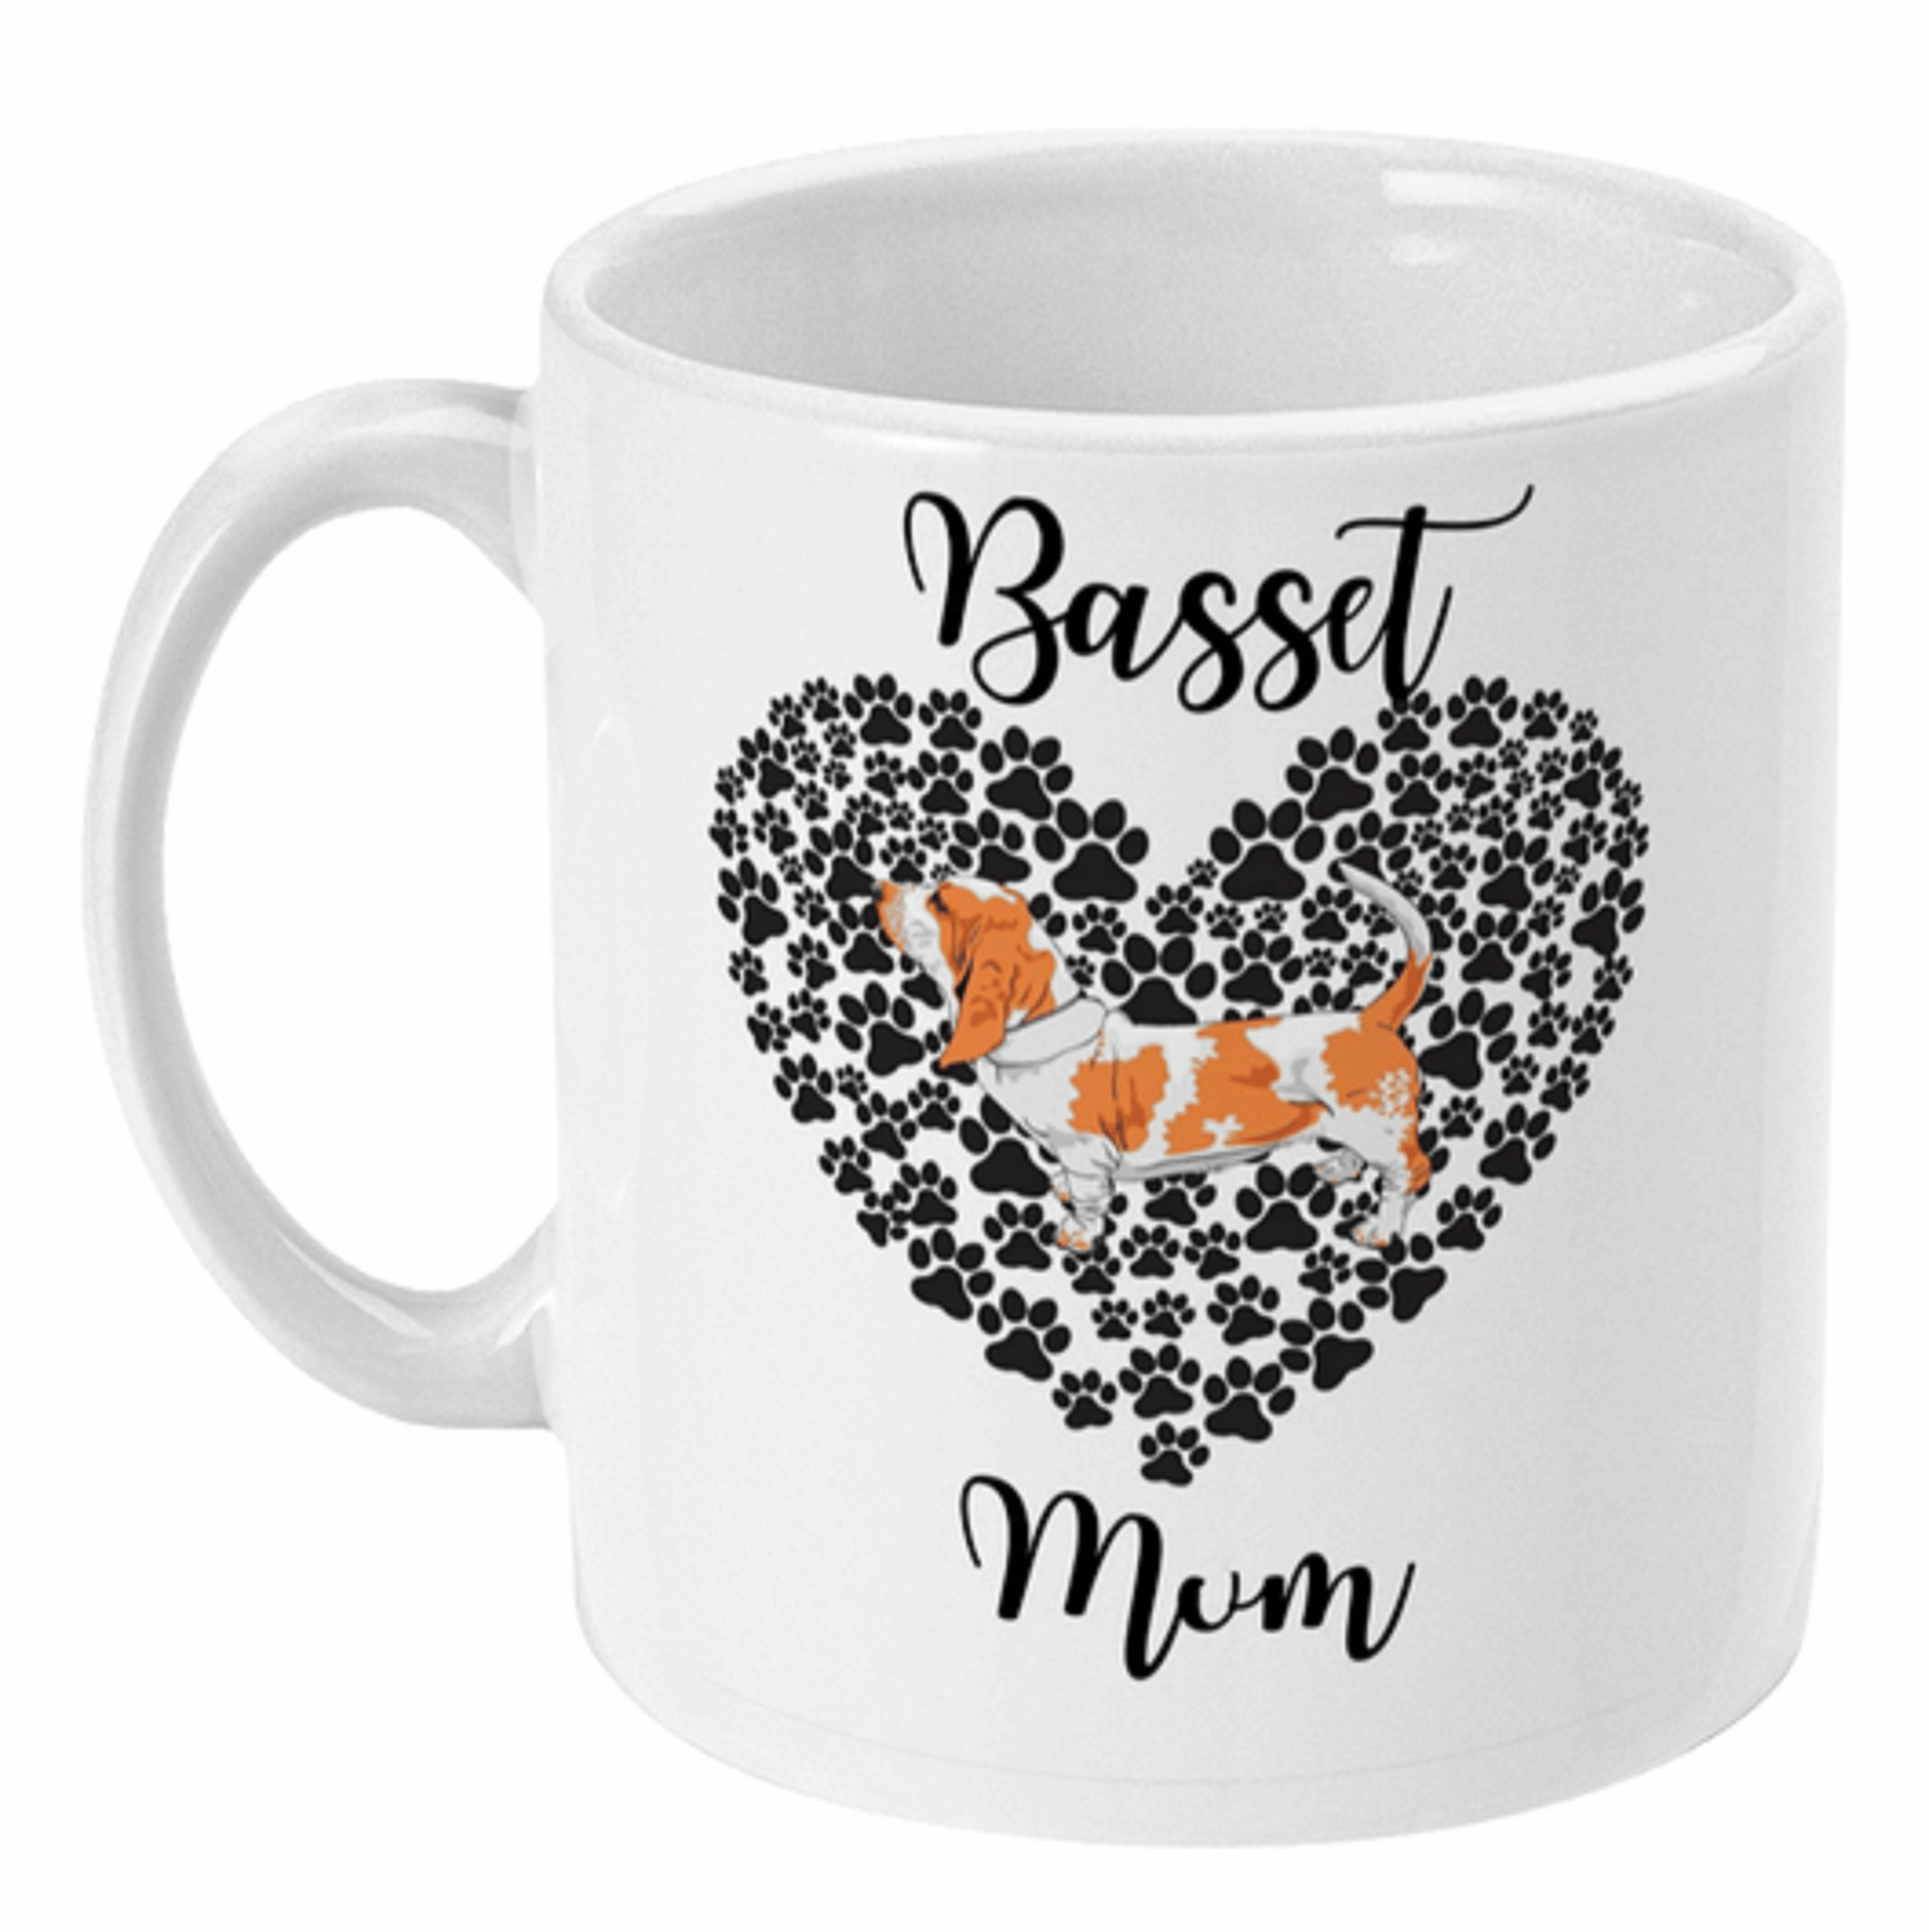  Basset Hound Mum Coffee or Tea Mug by Free Spirit Accessories sold by Free Spirit Accessories